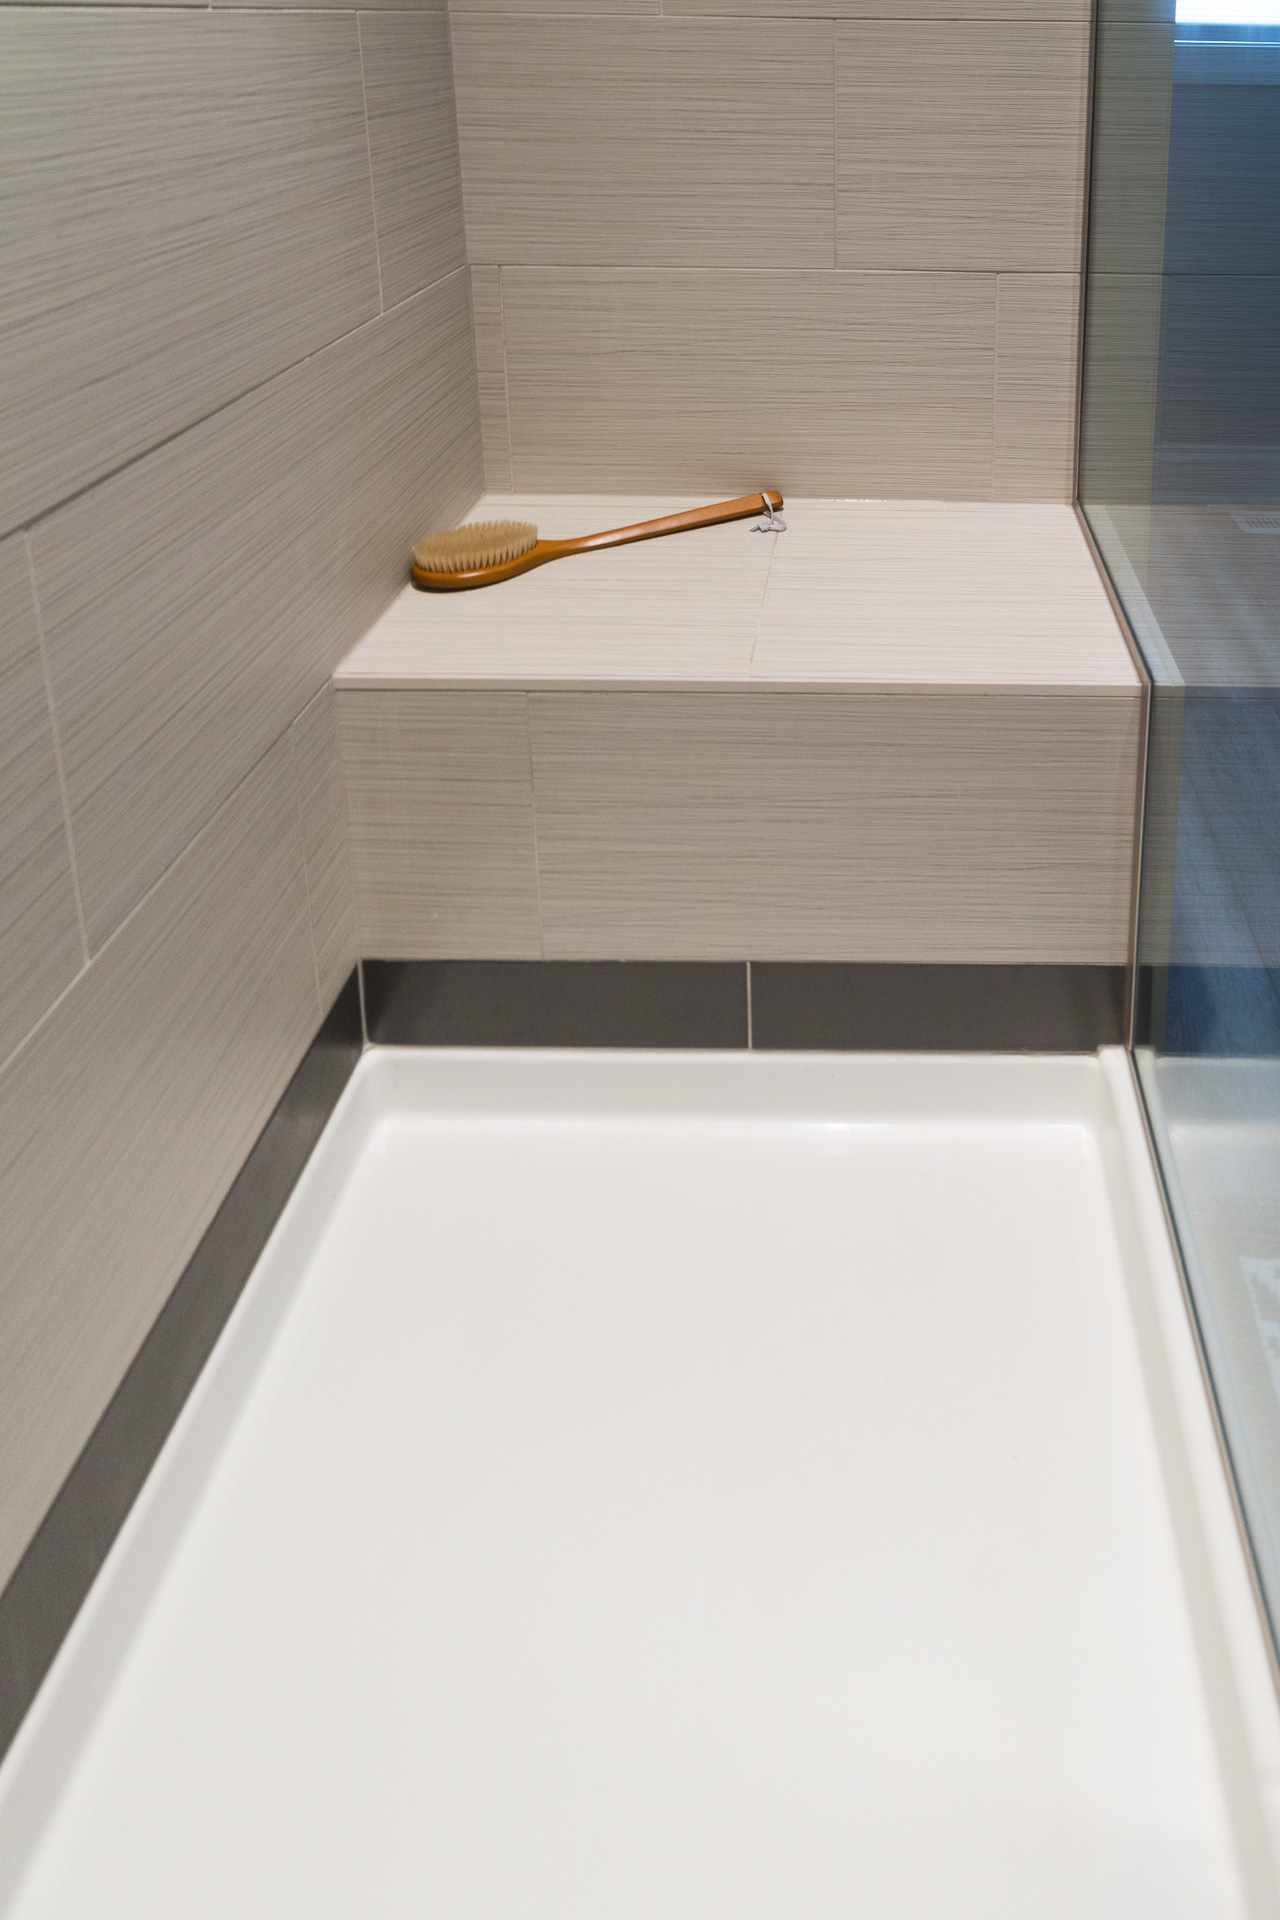 7 Must-Have Essentials For A Walk-in Shower Design — Degnan  Design-Build-Remodel